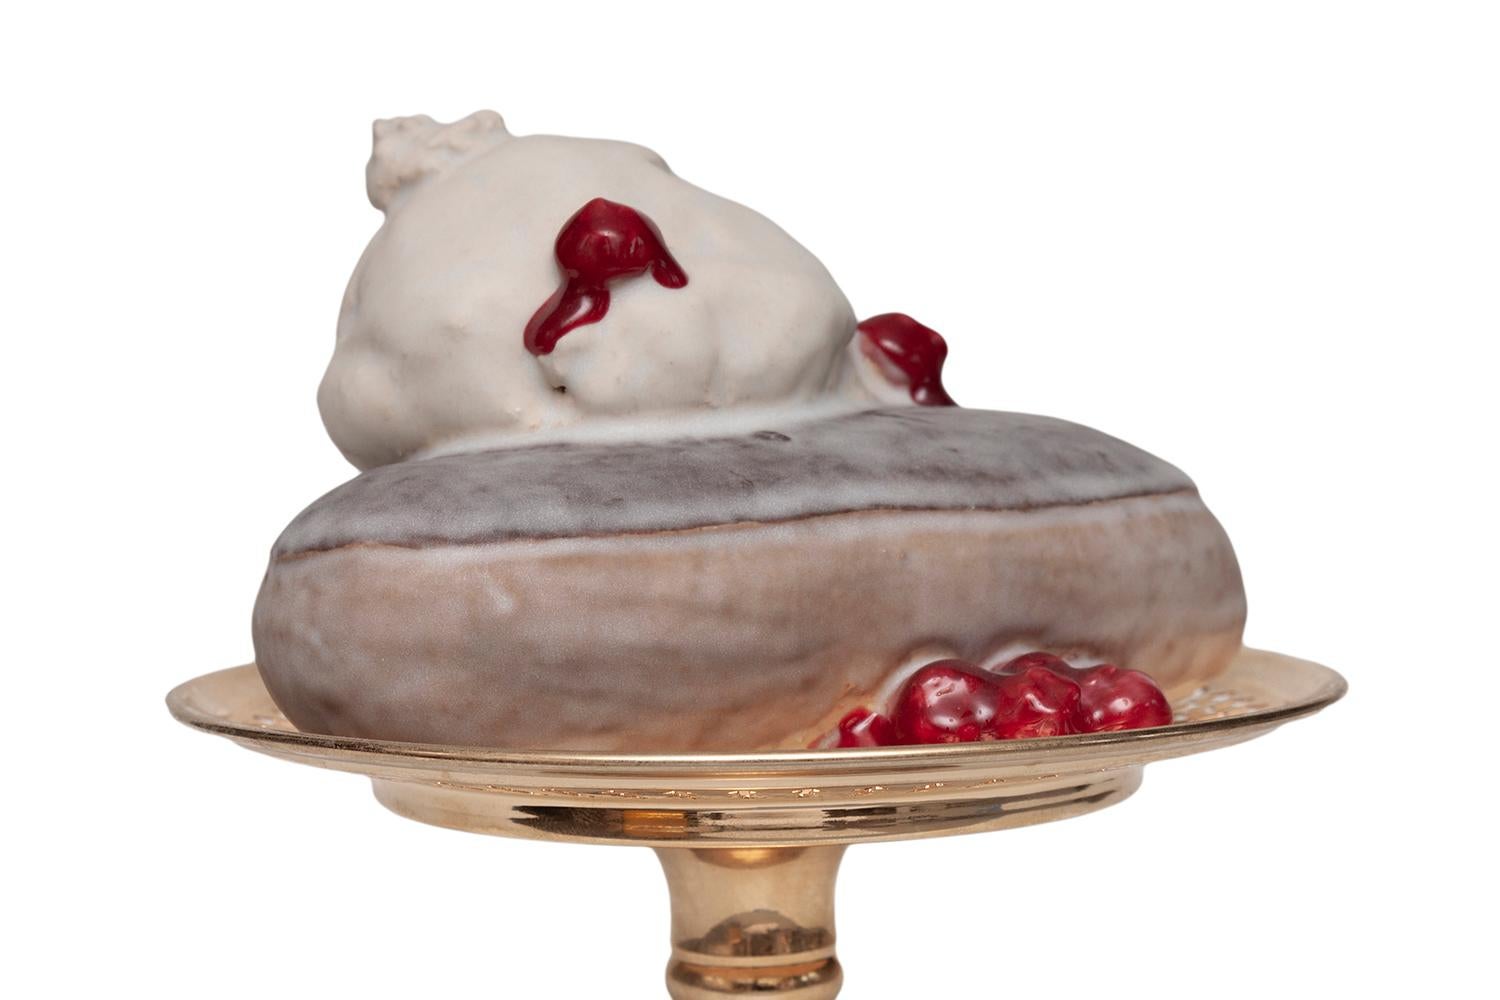 Plated Dessert - Contemporary Sculpture by Dirk Staschke